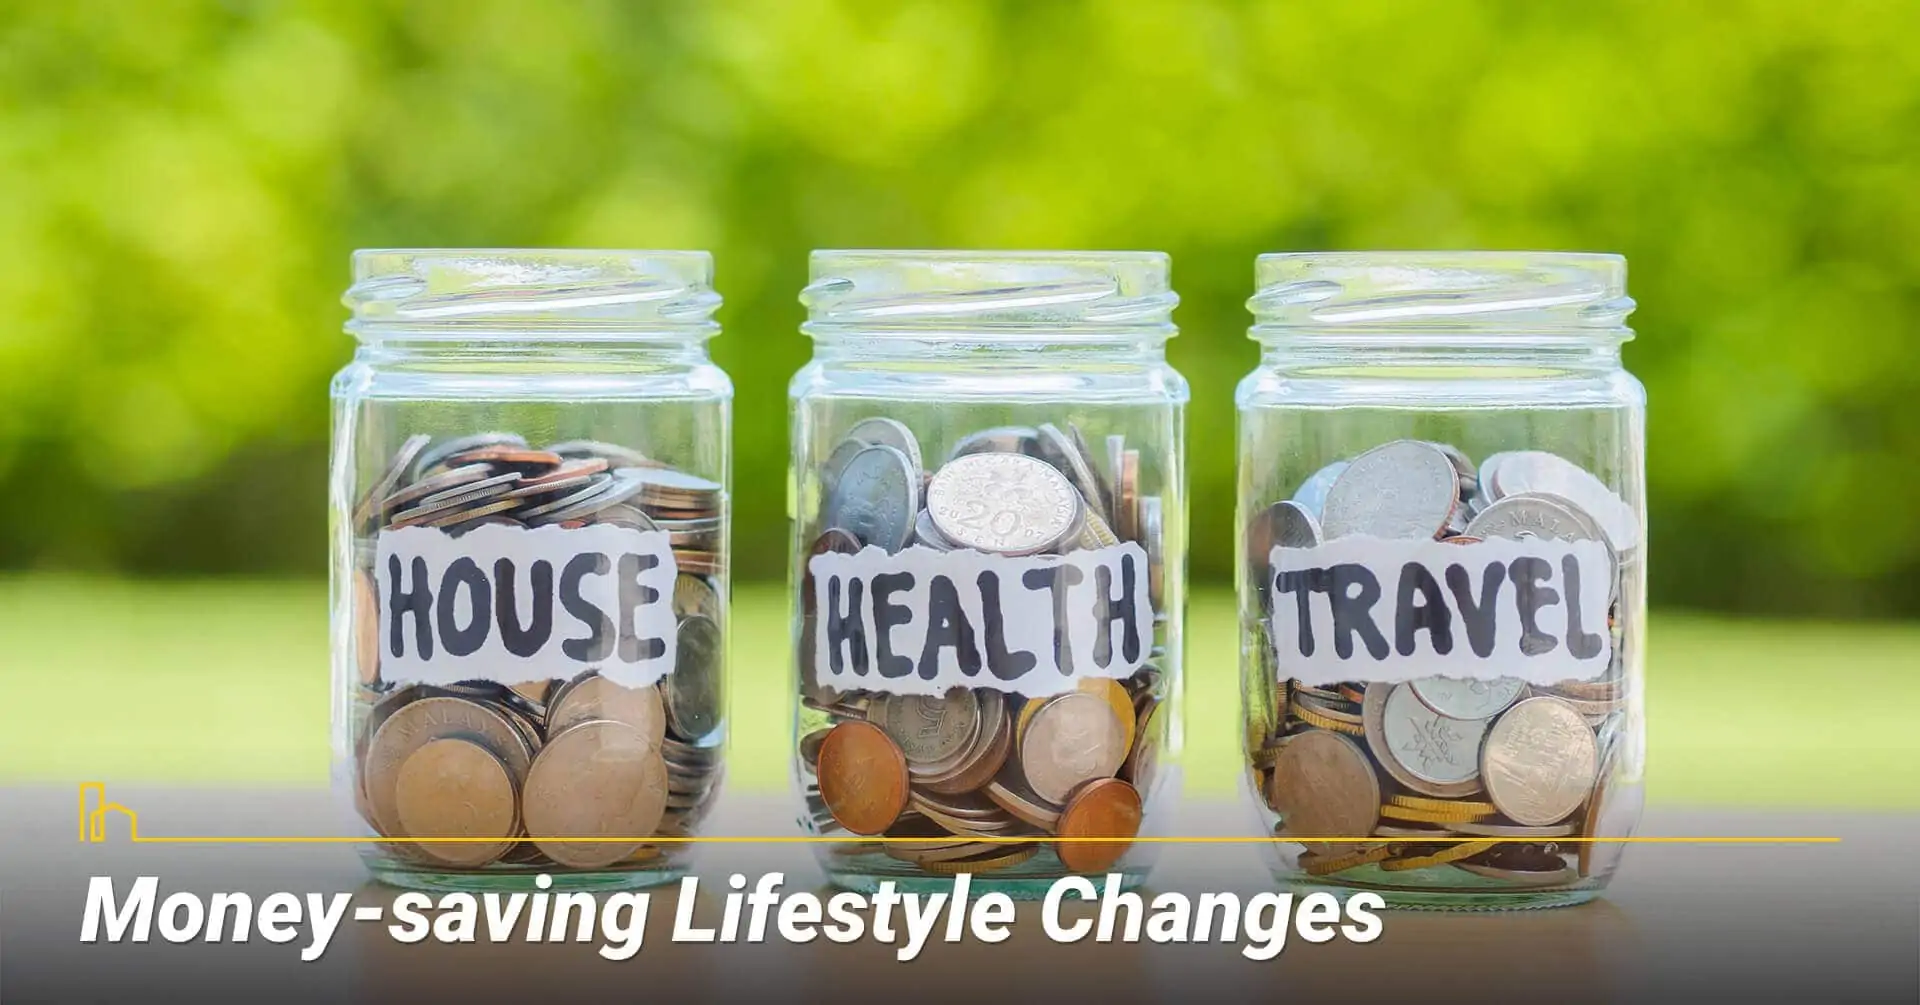 Money-saving Lifestyle Changes, change your life